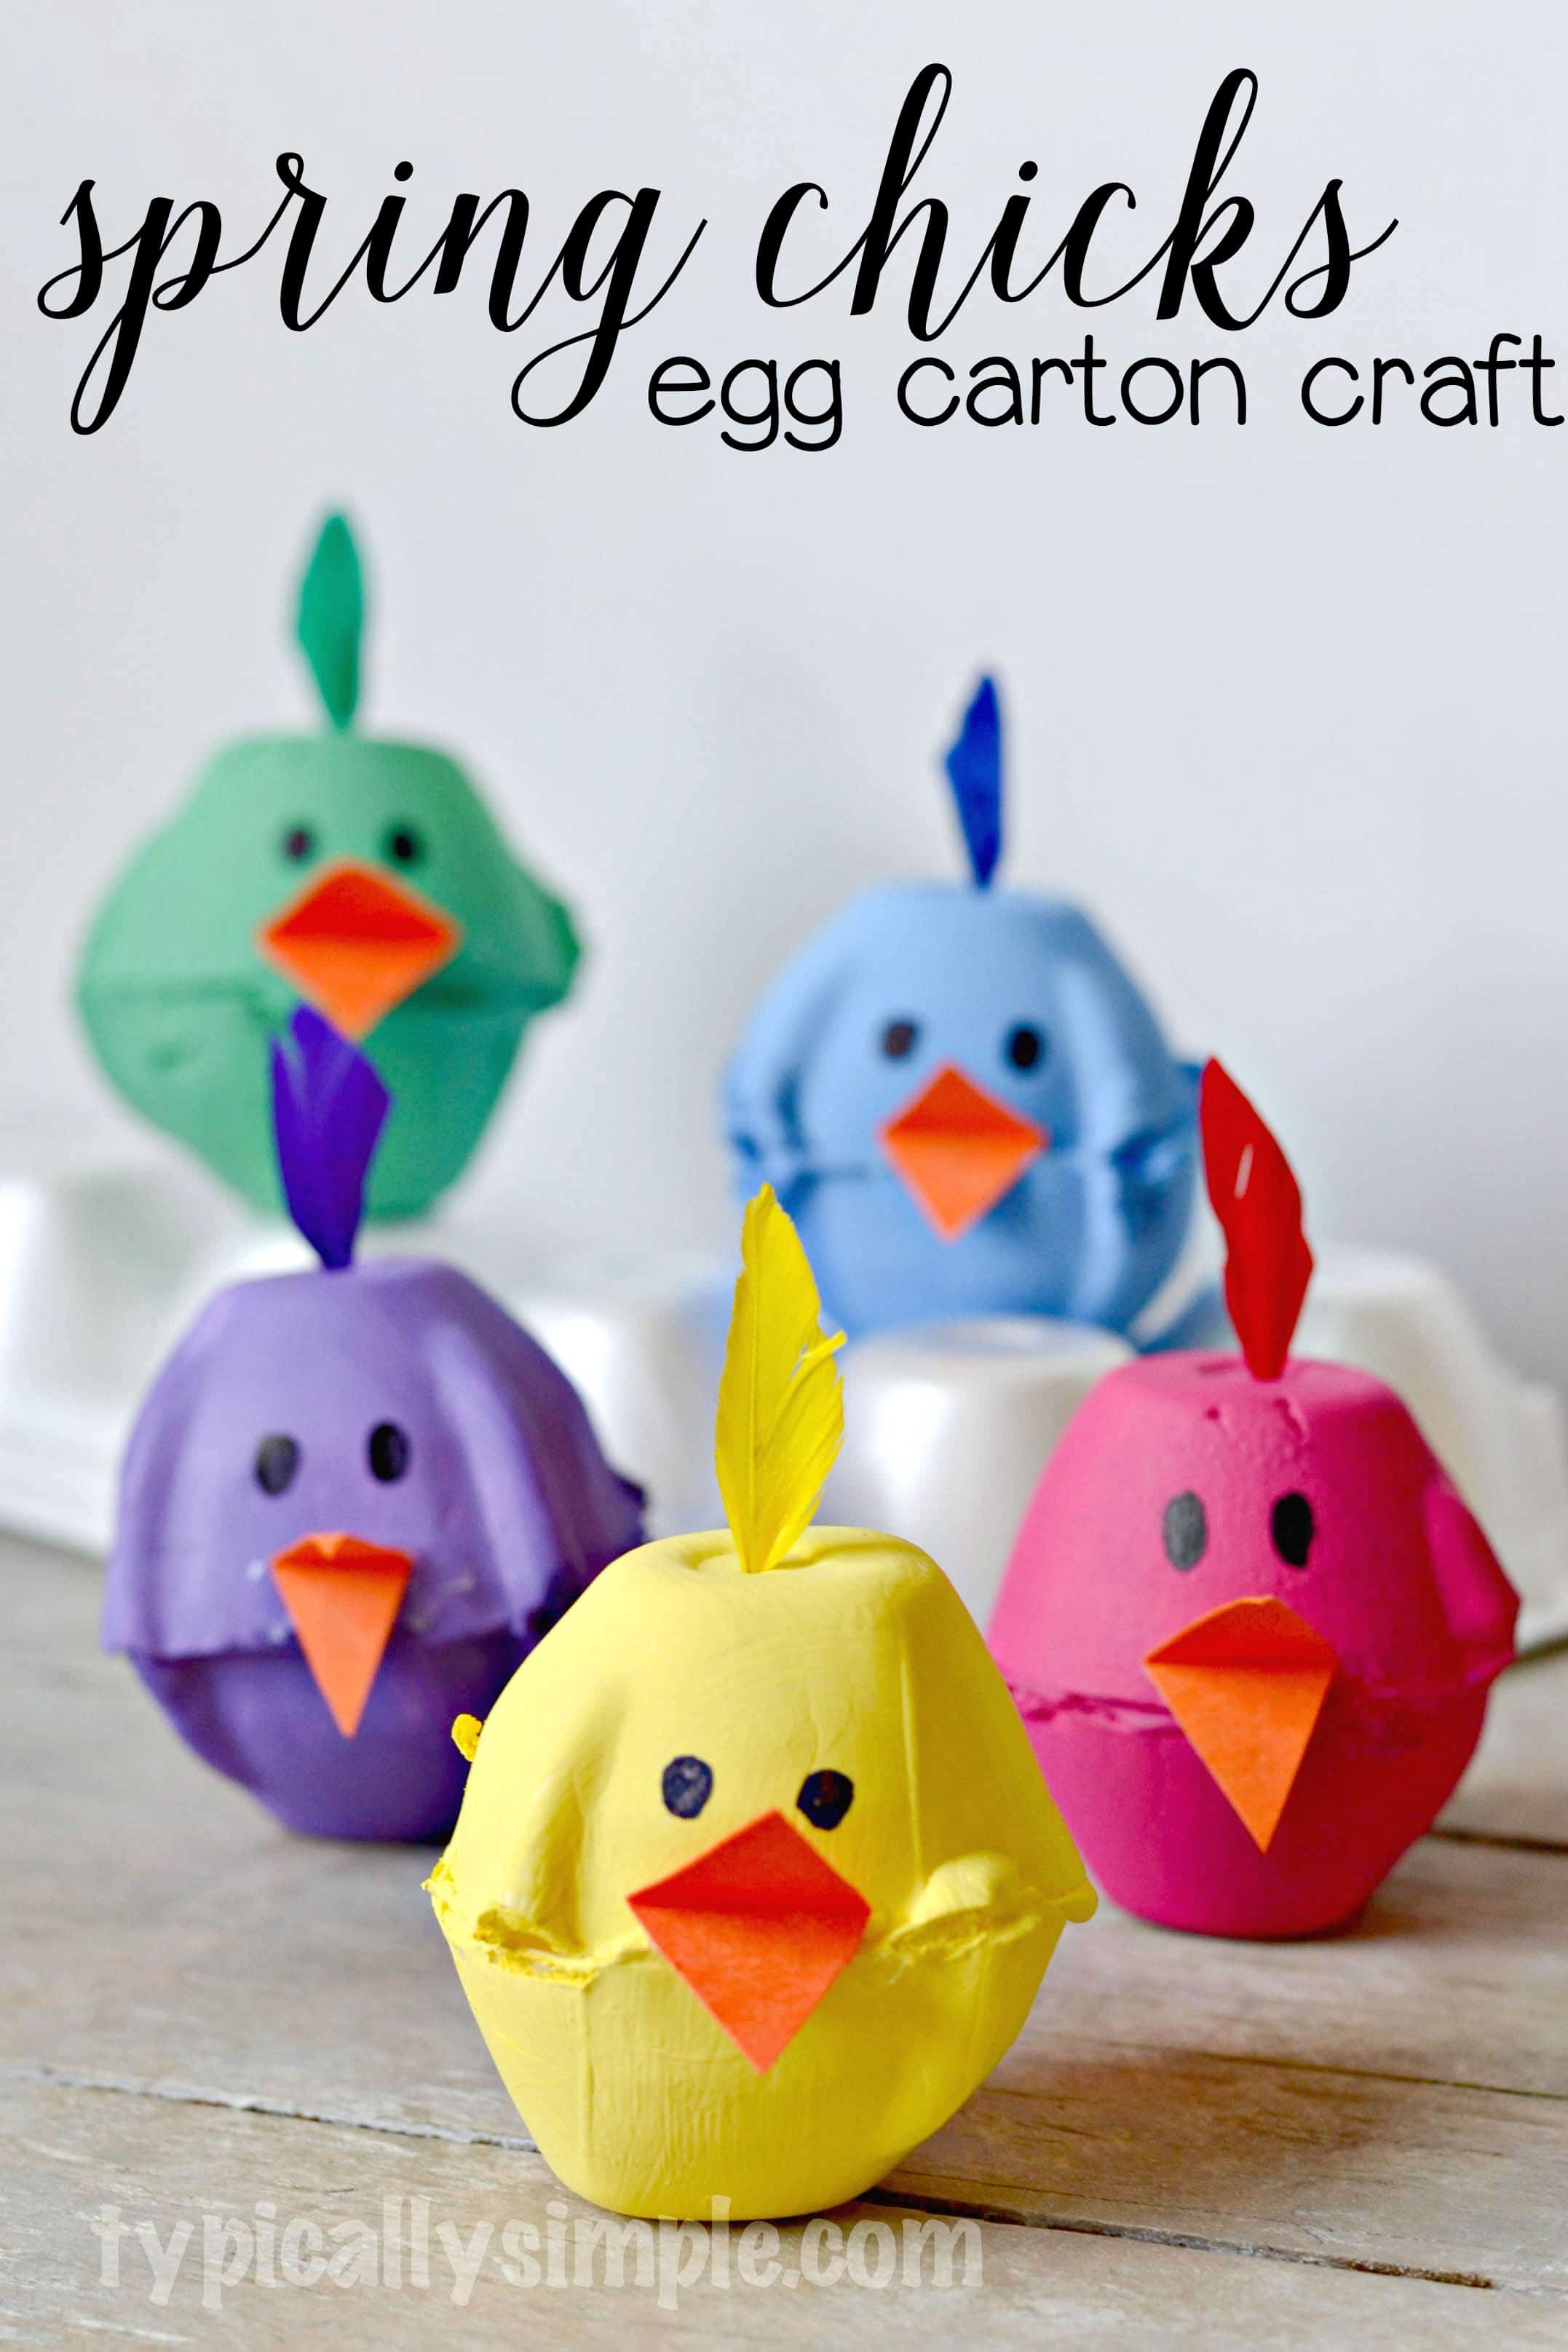 Halloween Crafts Using Egg Cartons: Get Creative!